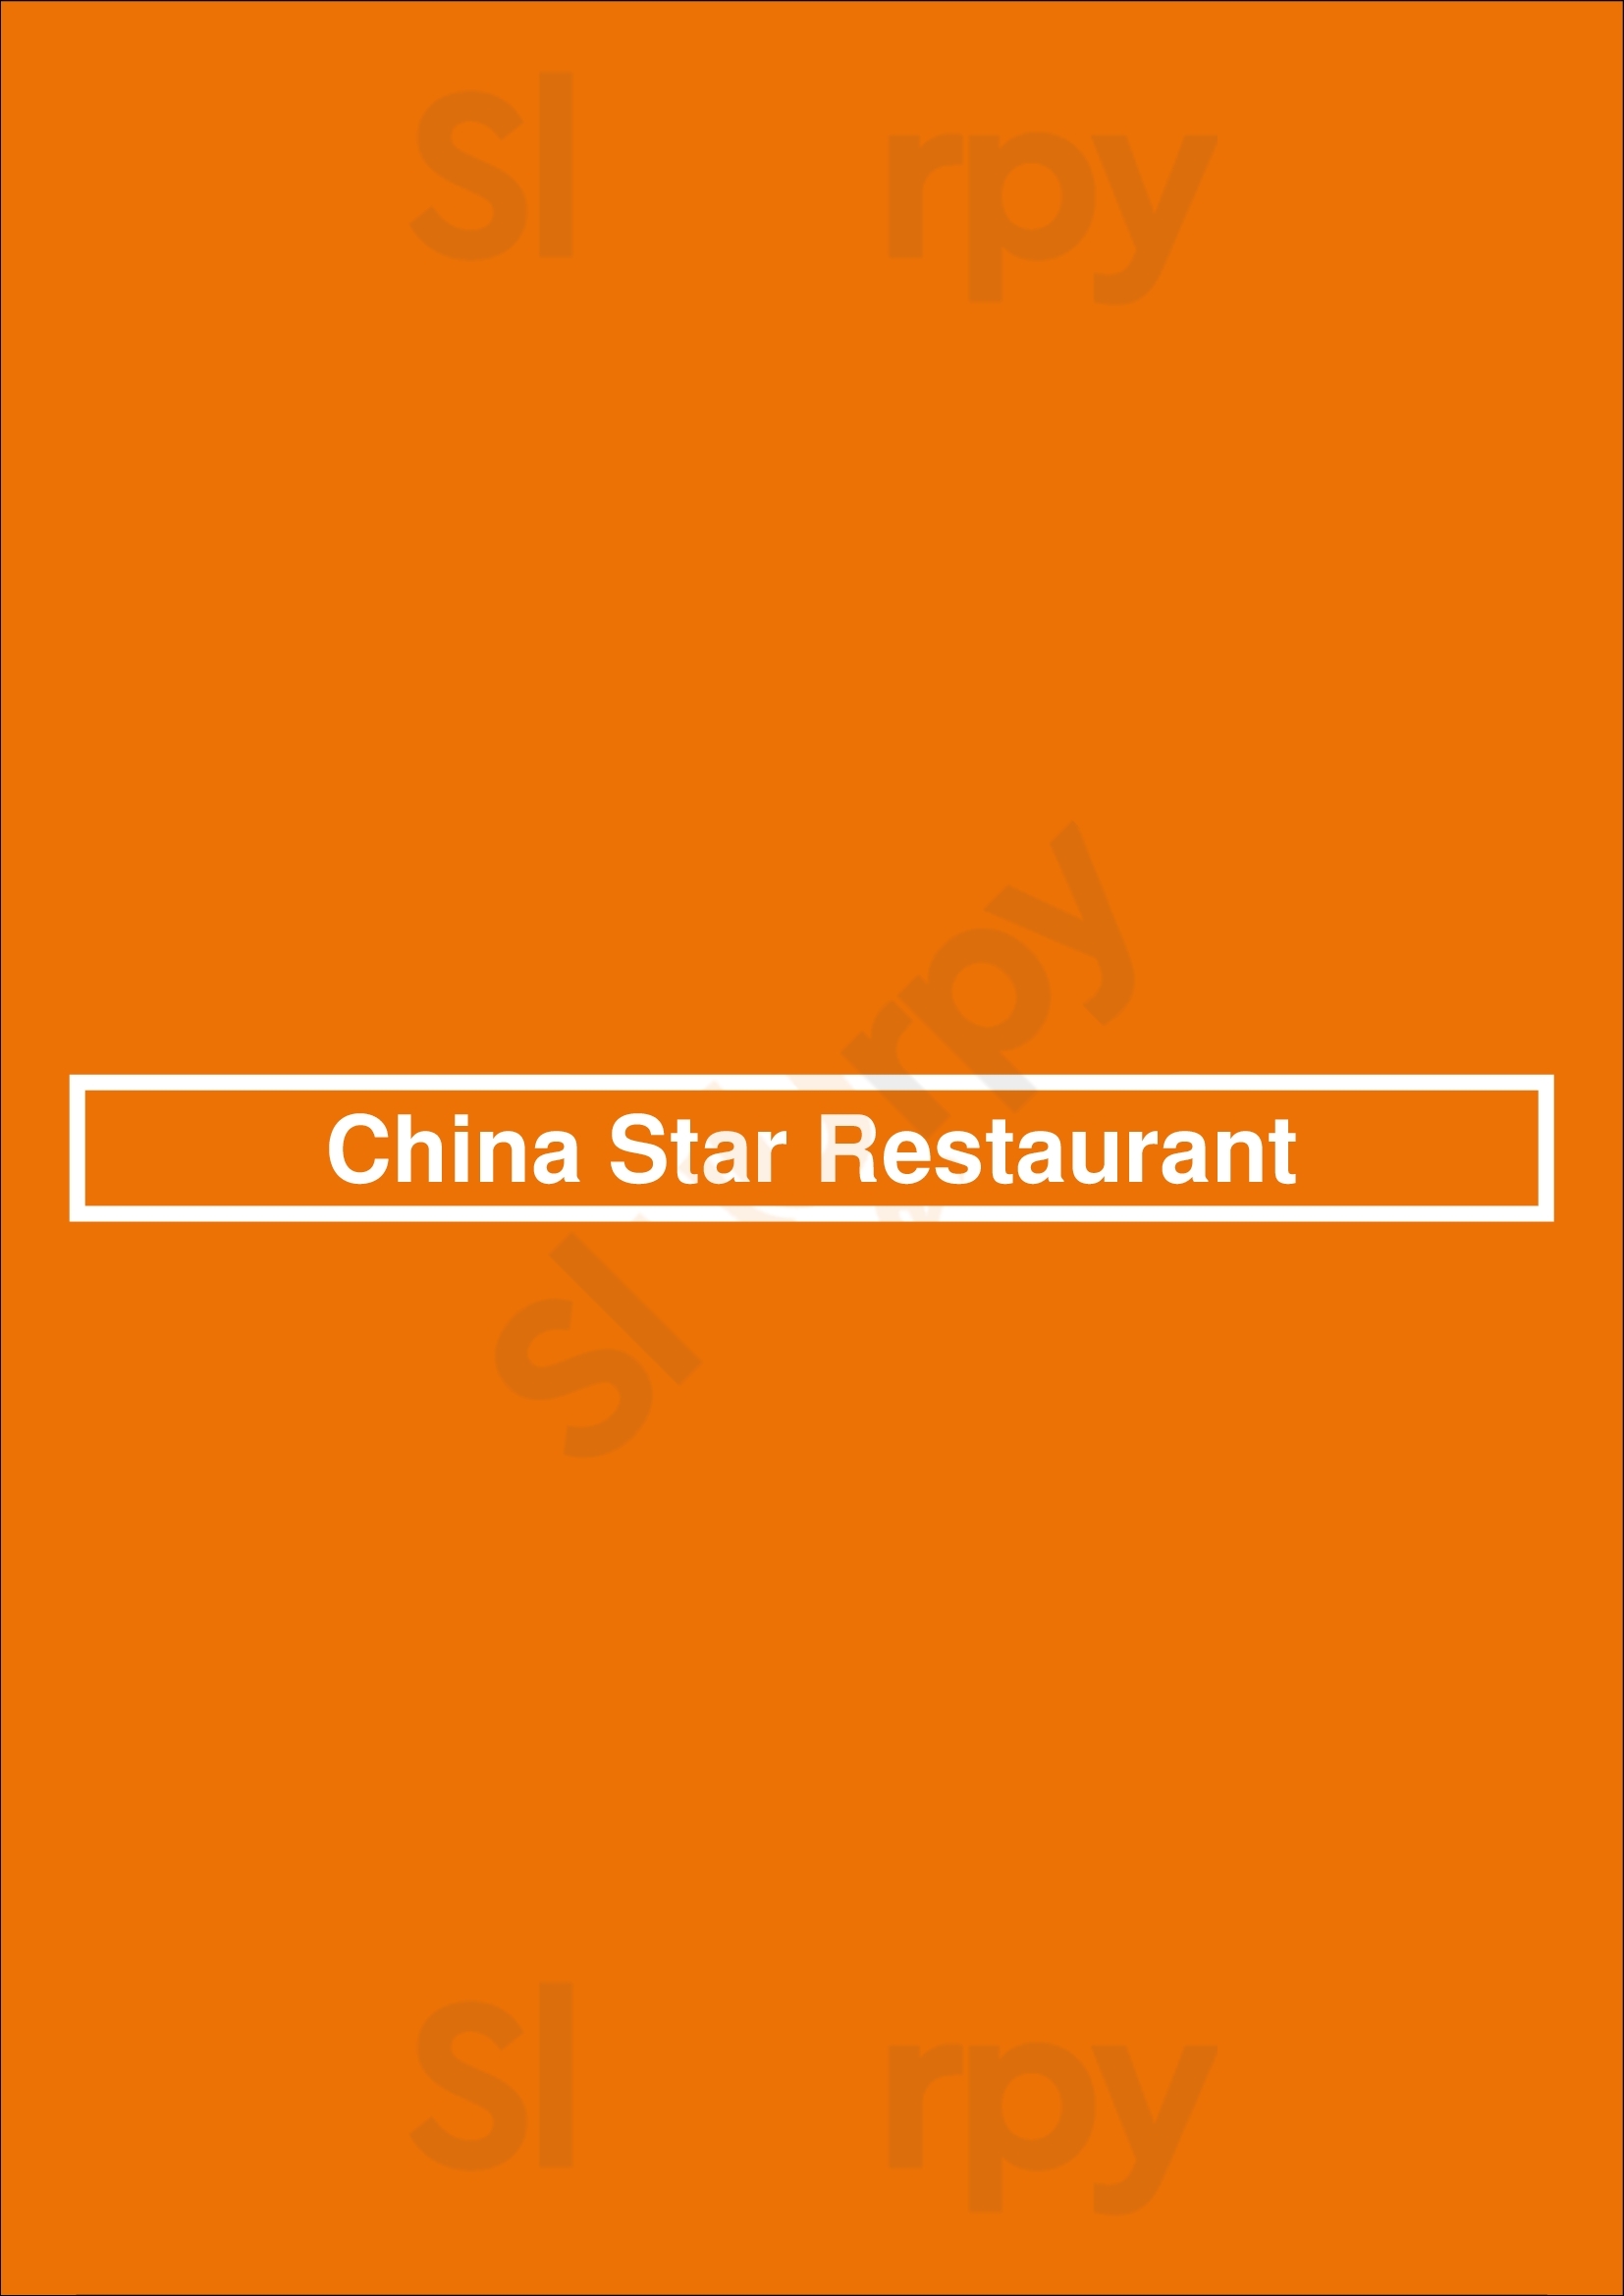 China Star Restaurant Milton Menu - 1